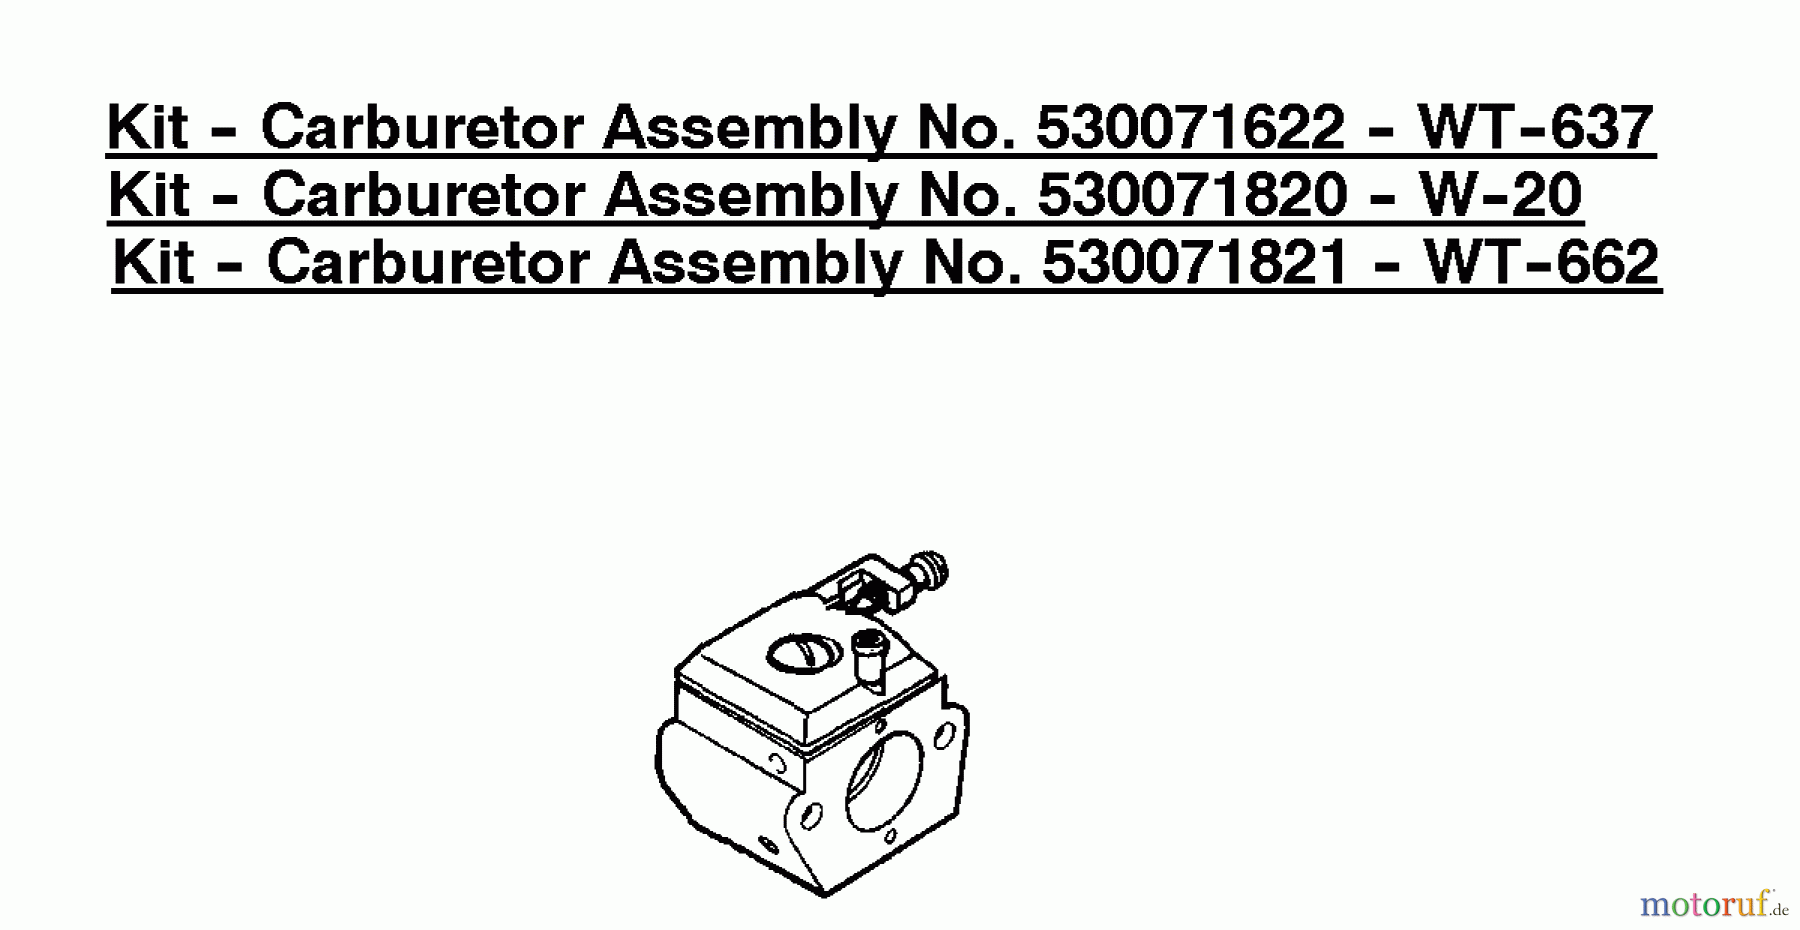  Poulan / Weed Eater Motorsägen 2050LE (Type 1) - Poulan Pioneer Chainsaw Kit - Carburetor Assembly